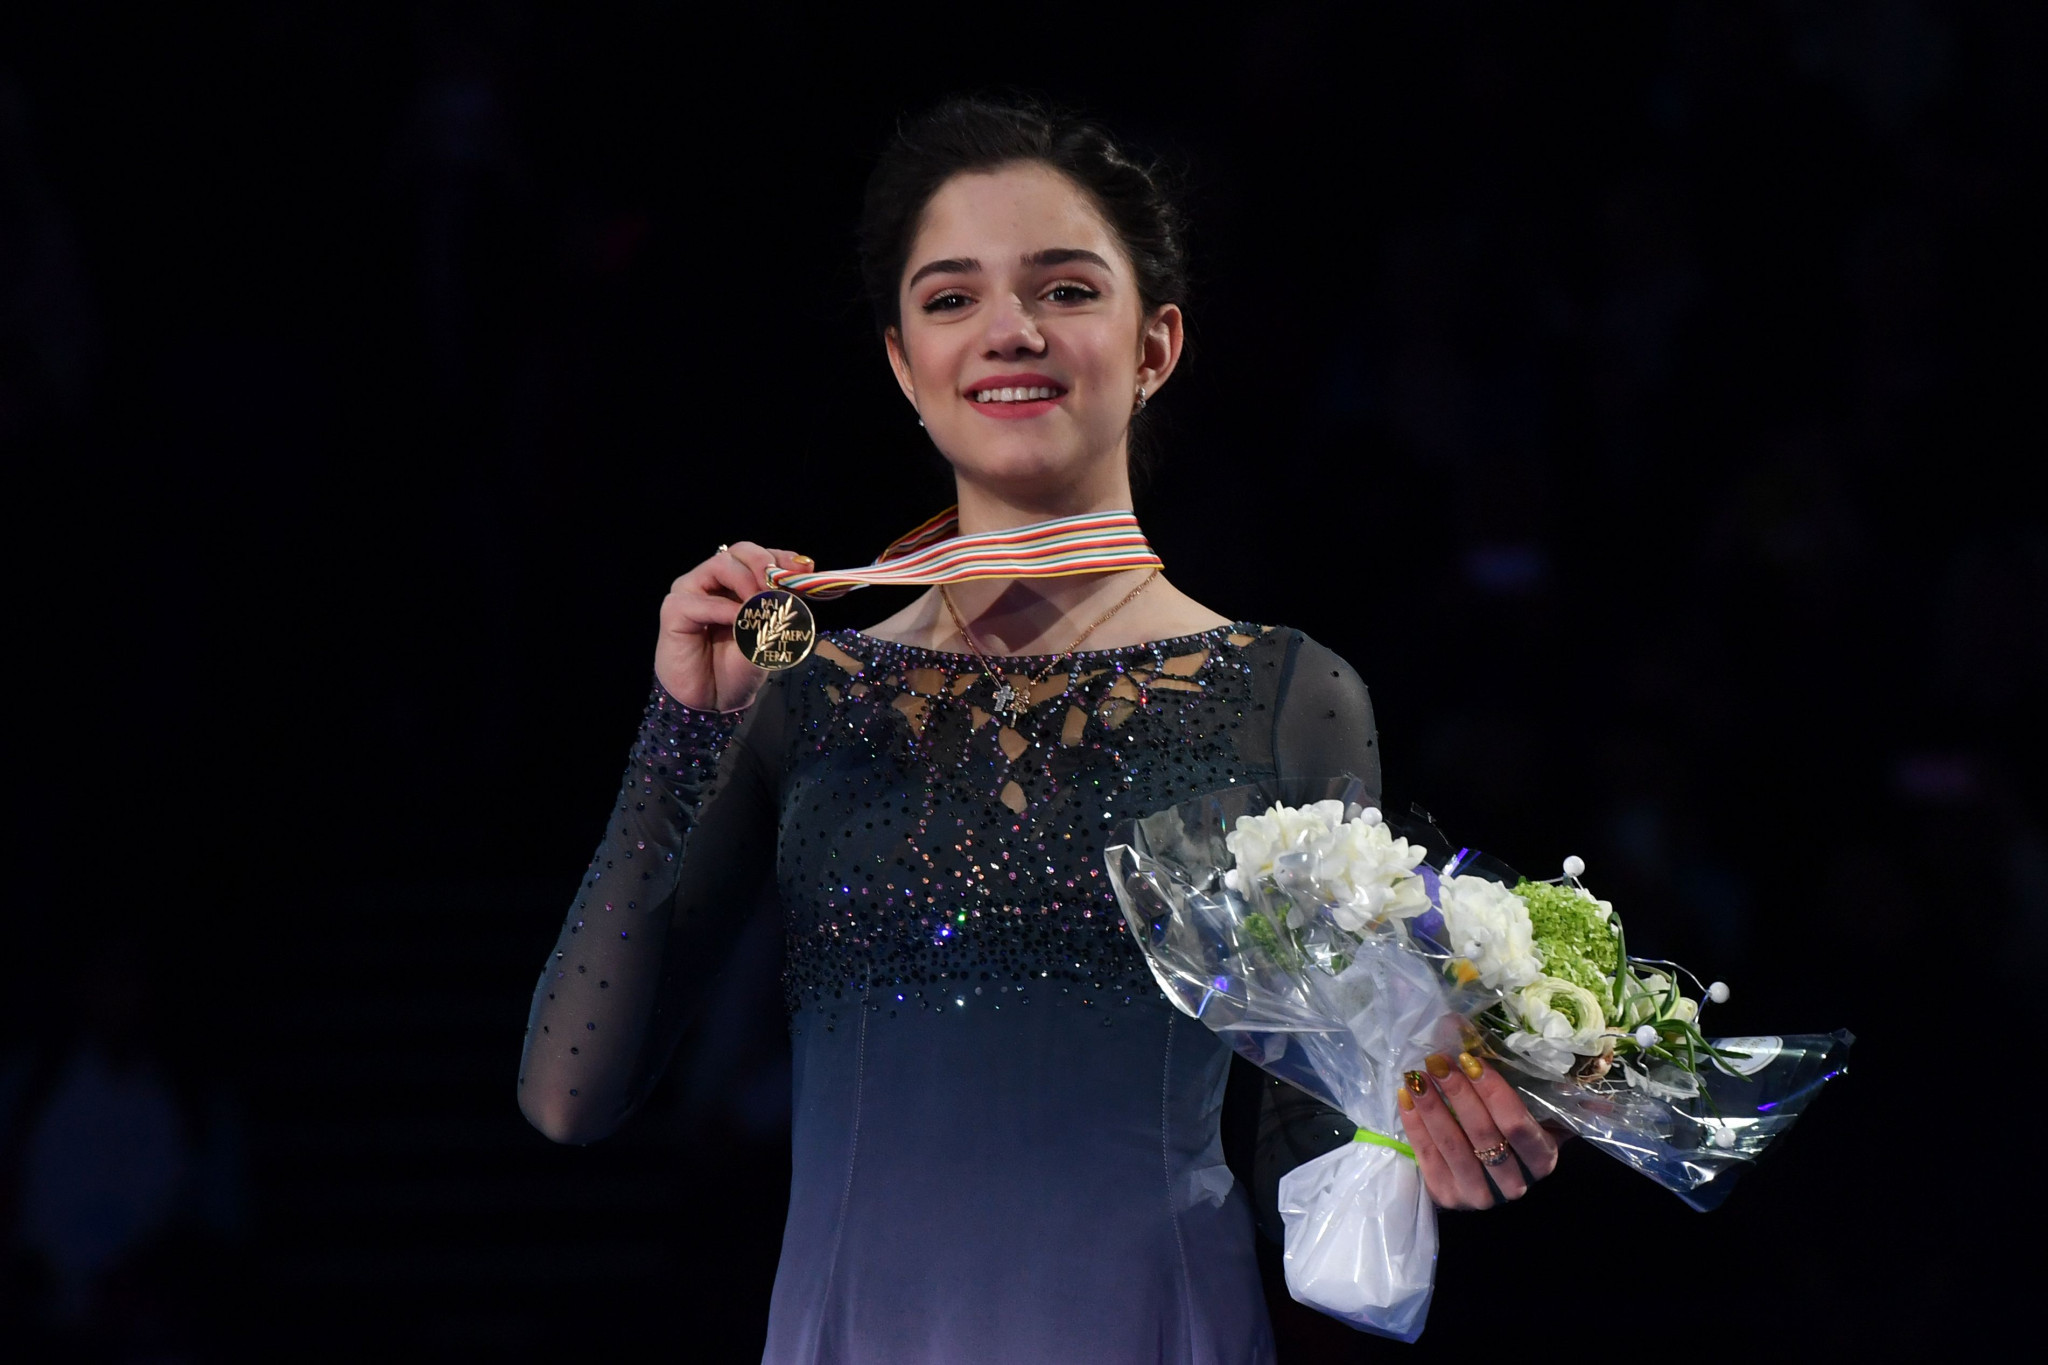 Medvedeva to make return at ISU European Figure Skating Championships